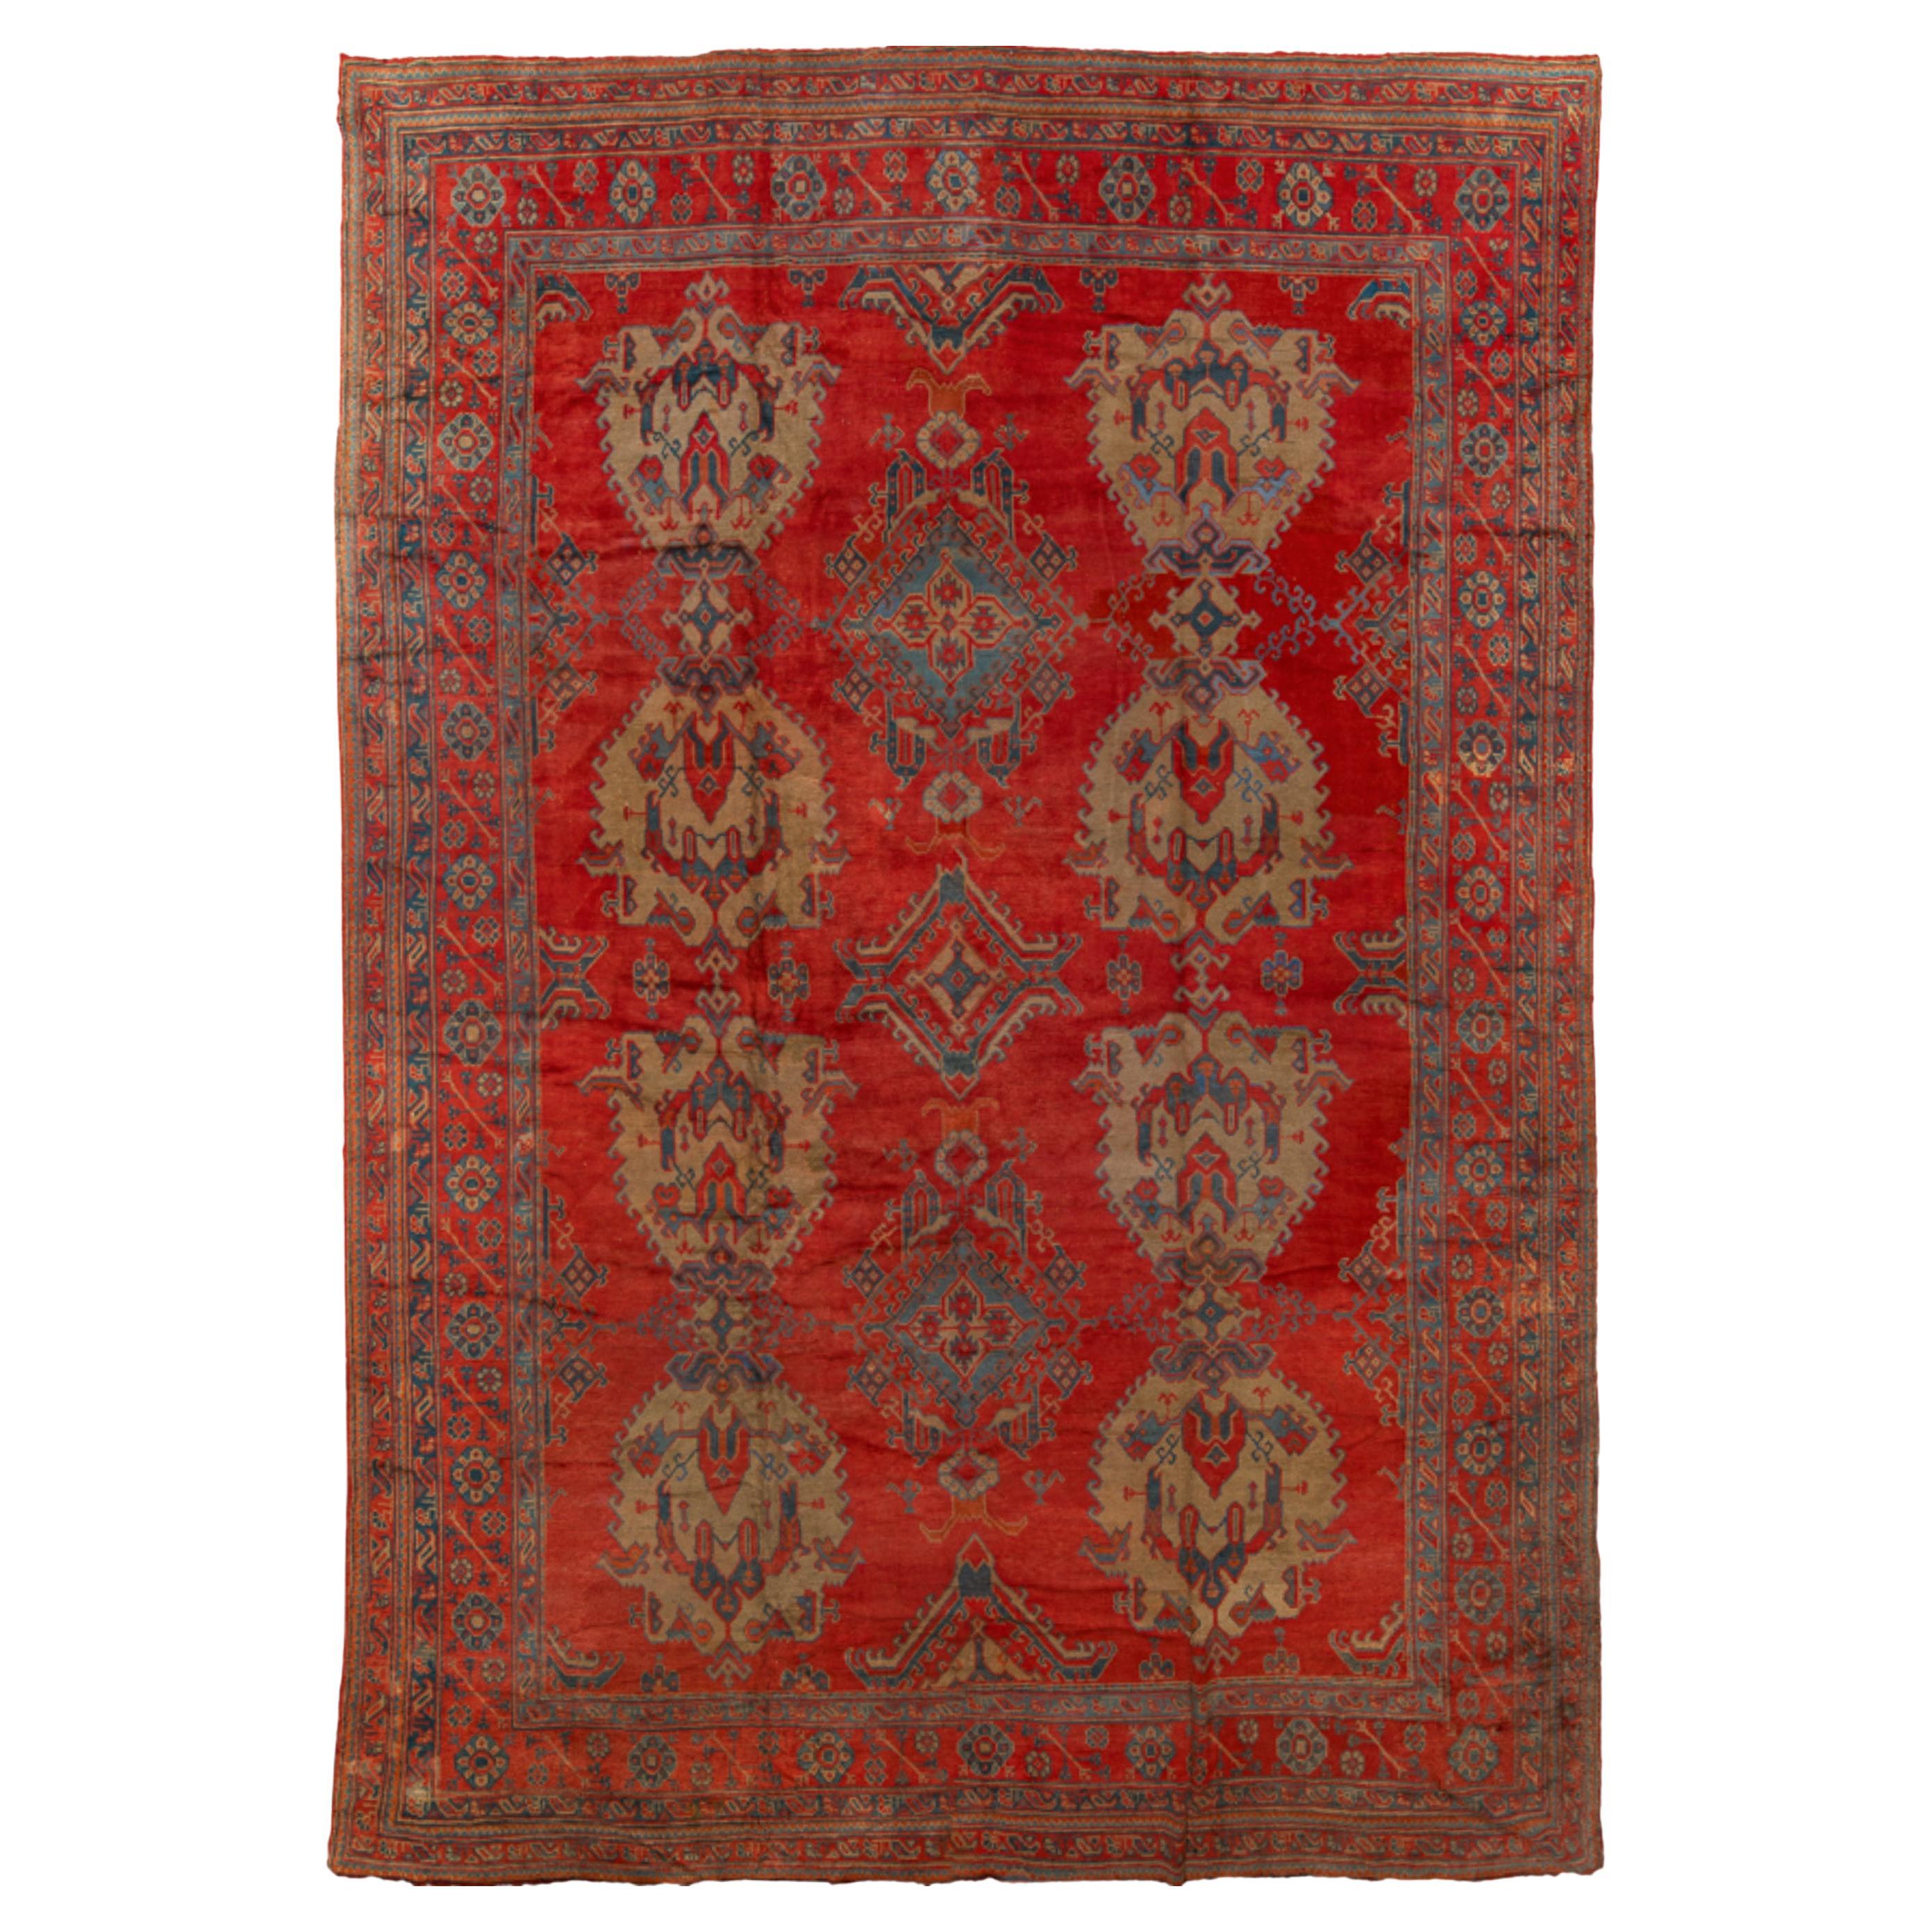 Antique Turkish Oushak Handwoven Luxury Wool Red Rug,  14'4 x 20' Size